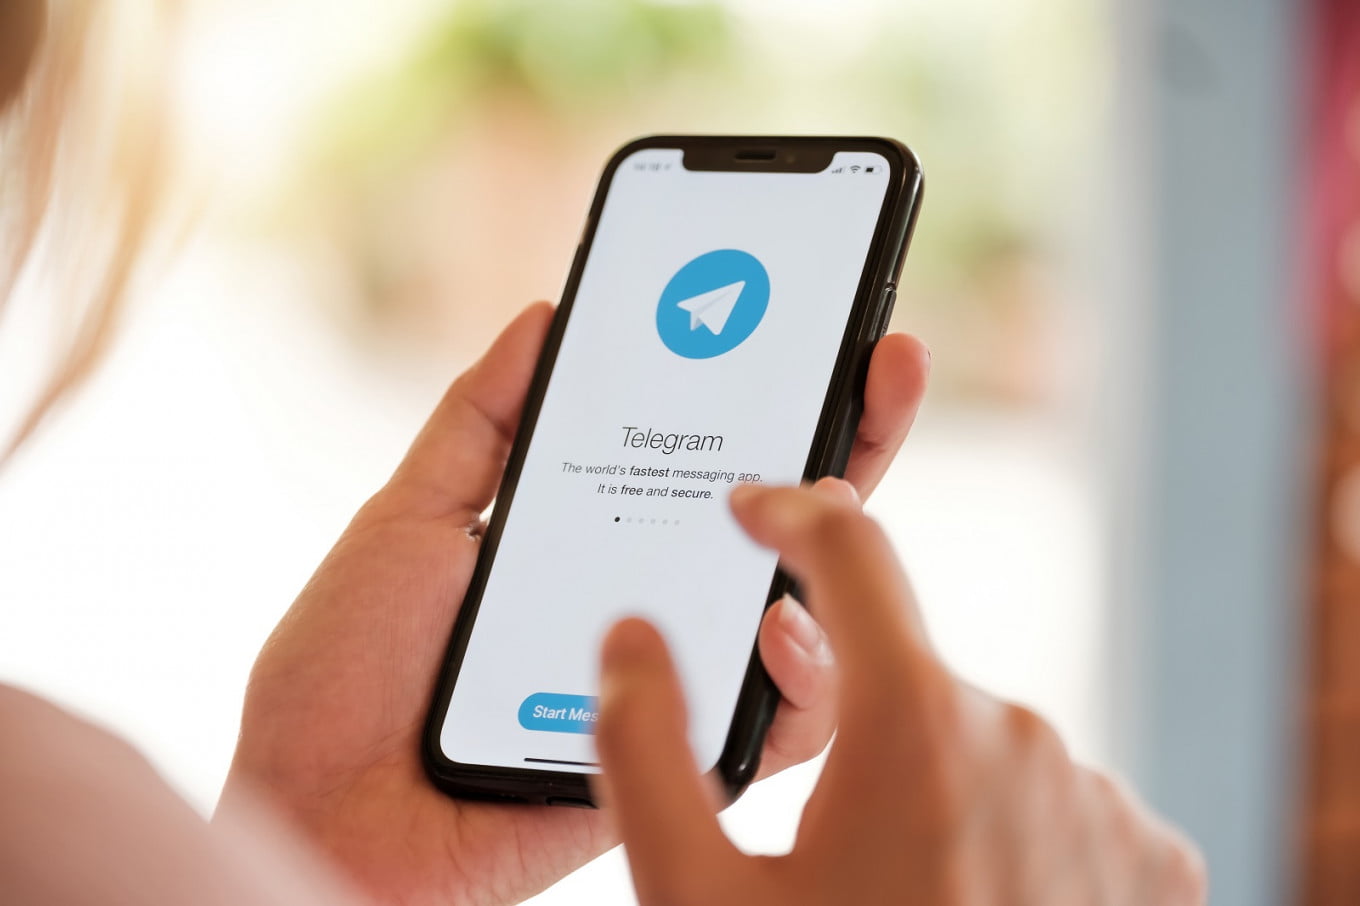 Photo Credit: Ikon thumnail aplikasi Telegram muncul di layar ponsel. Shutterstock /Natee Meepian